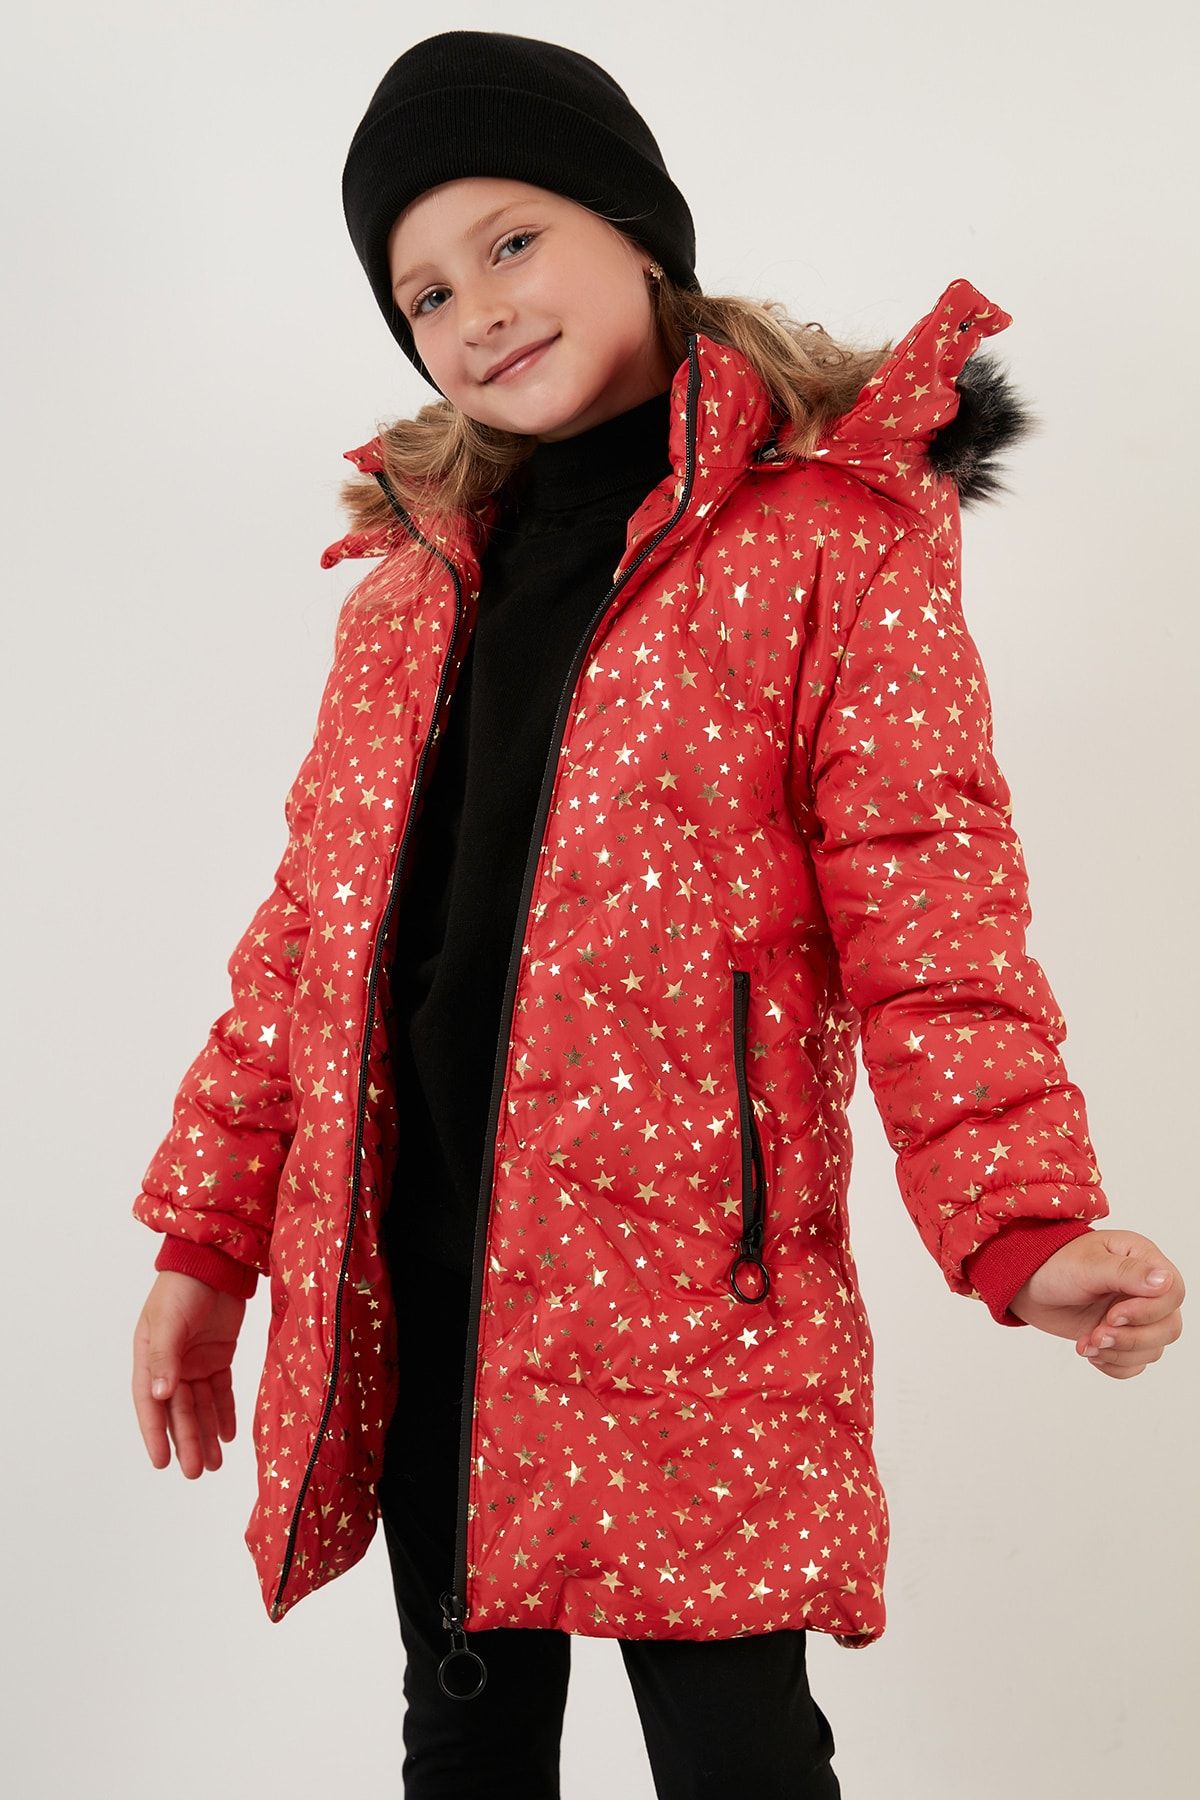 Lela کت یقه خز مصنوعی با طرح ستاره دار کلاه متحرک آستر زمستانی دخترانه